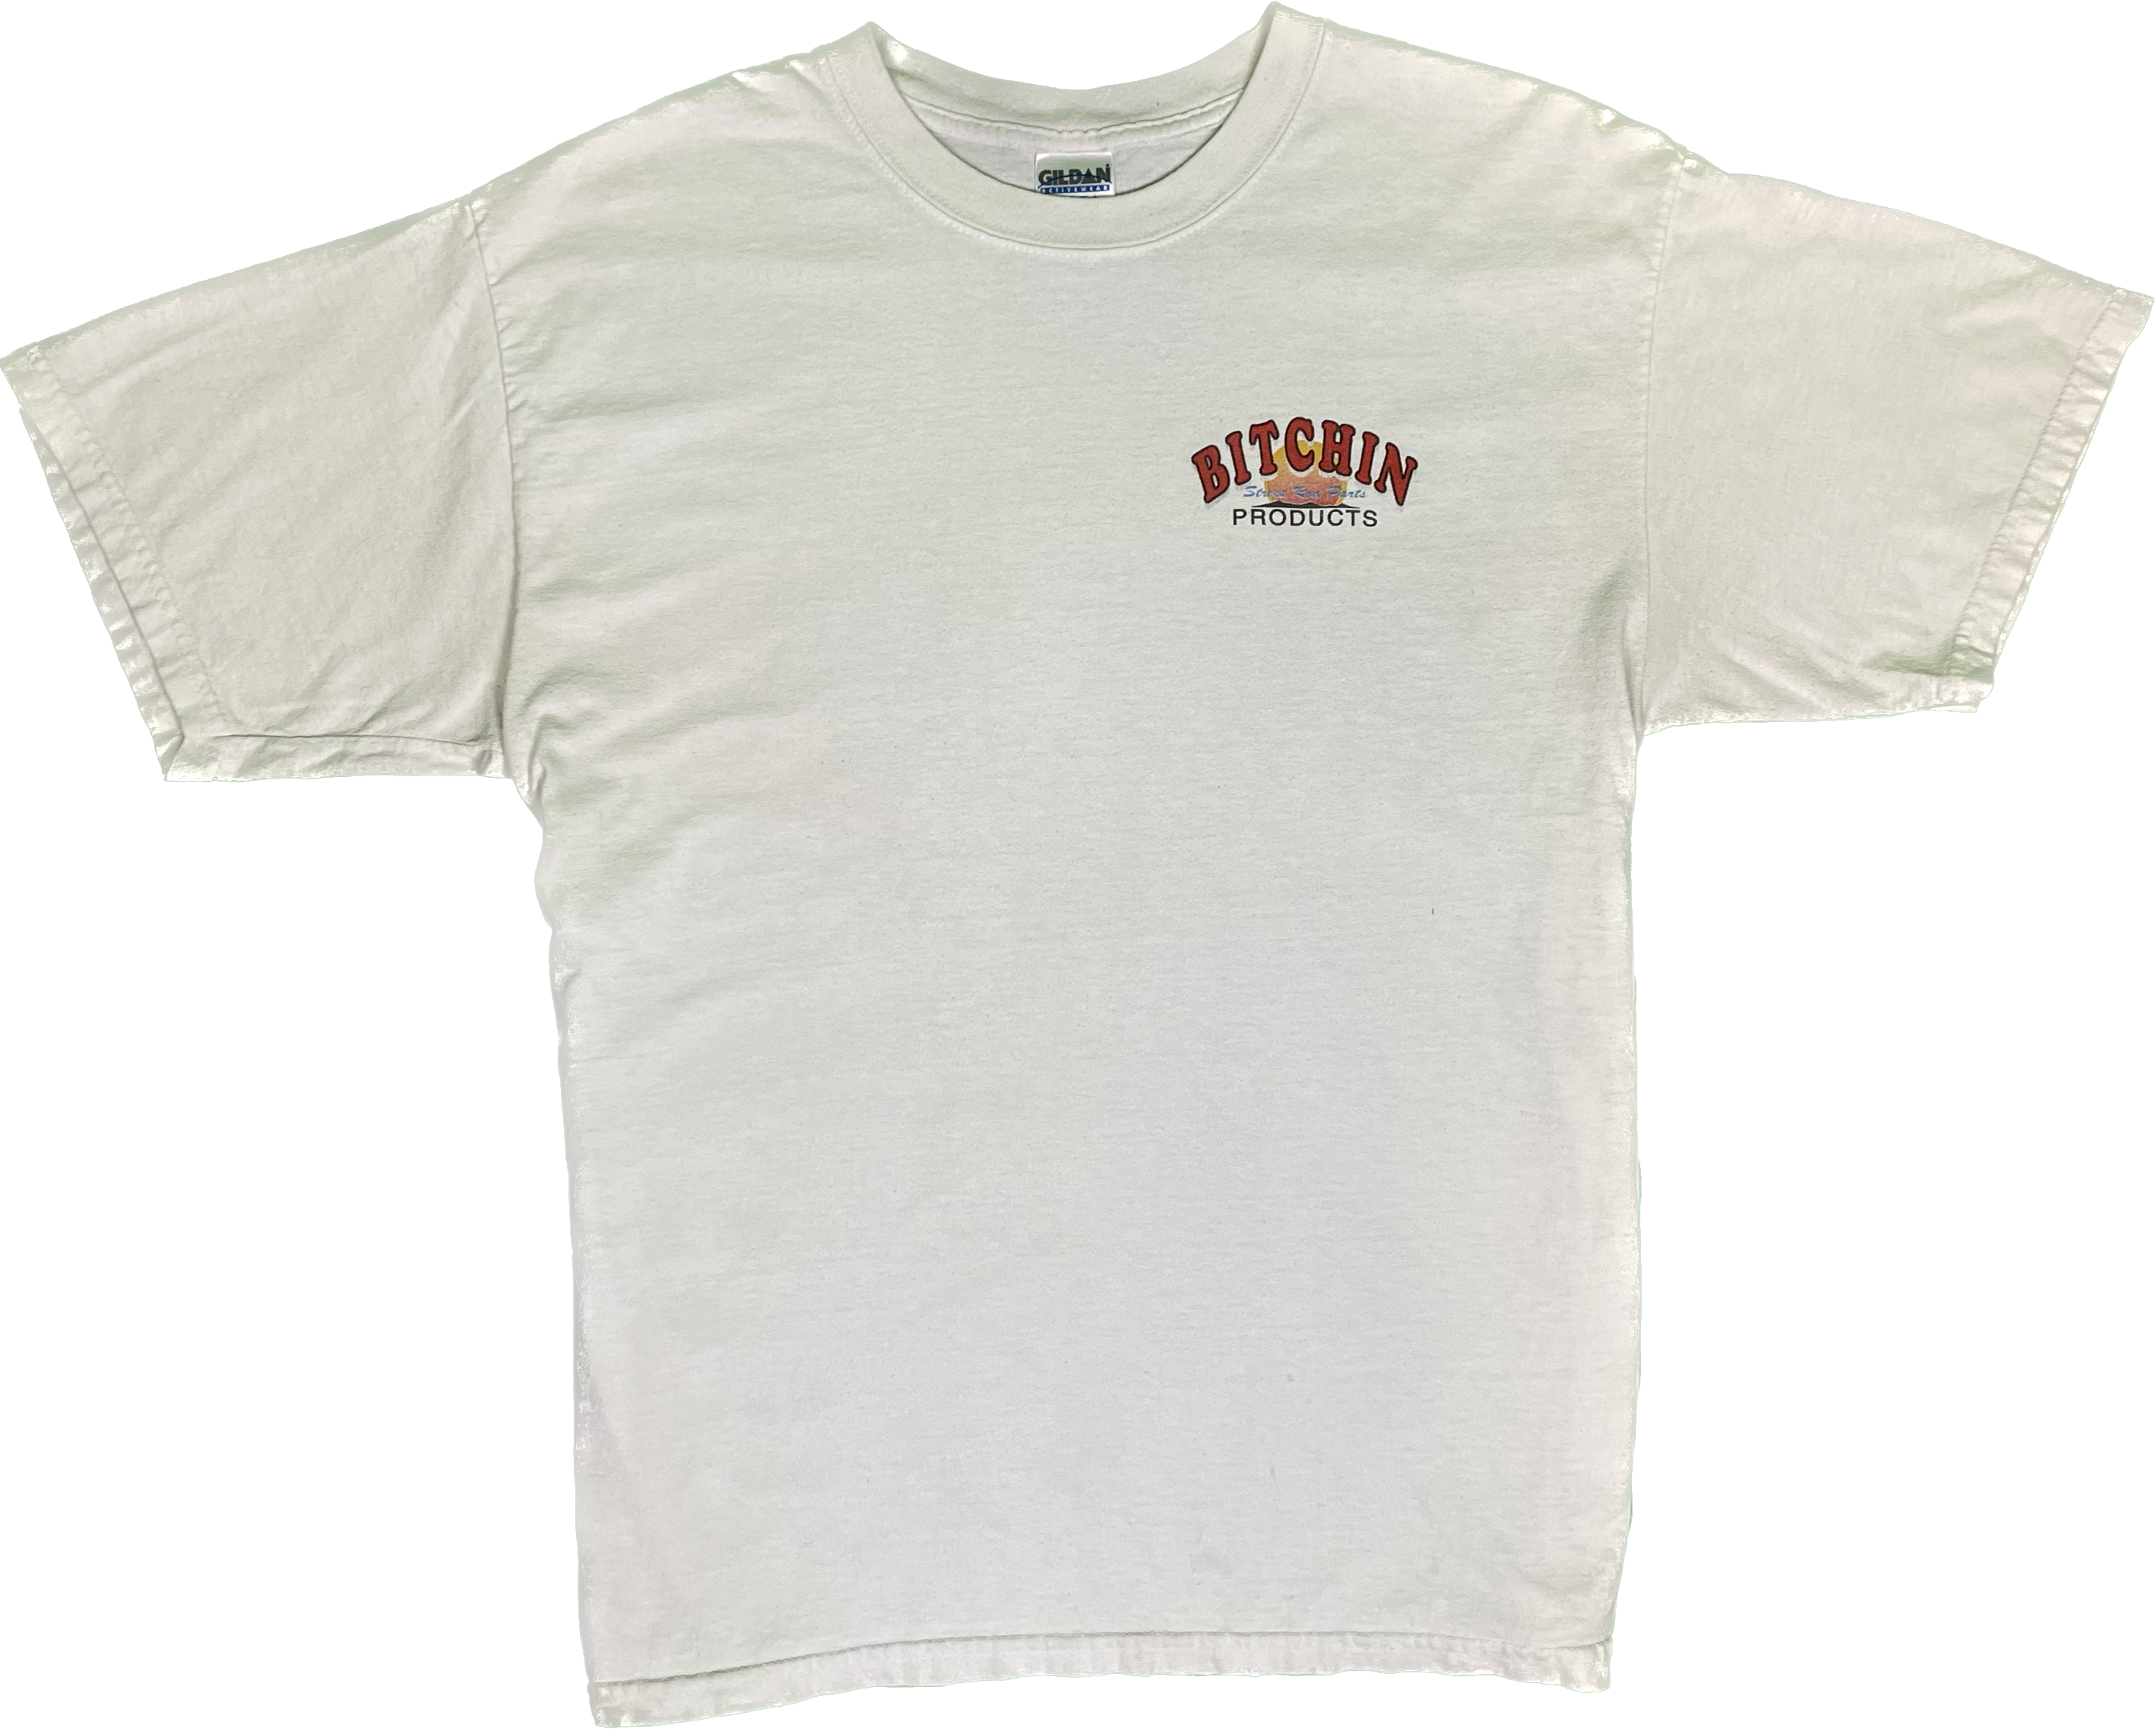 Bitchin Product Vintage T-Shirt